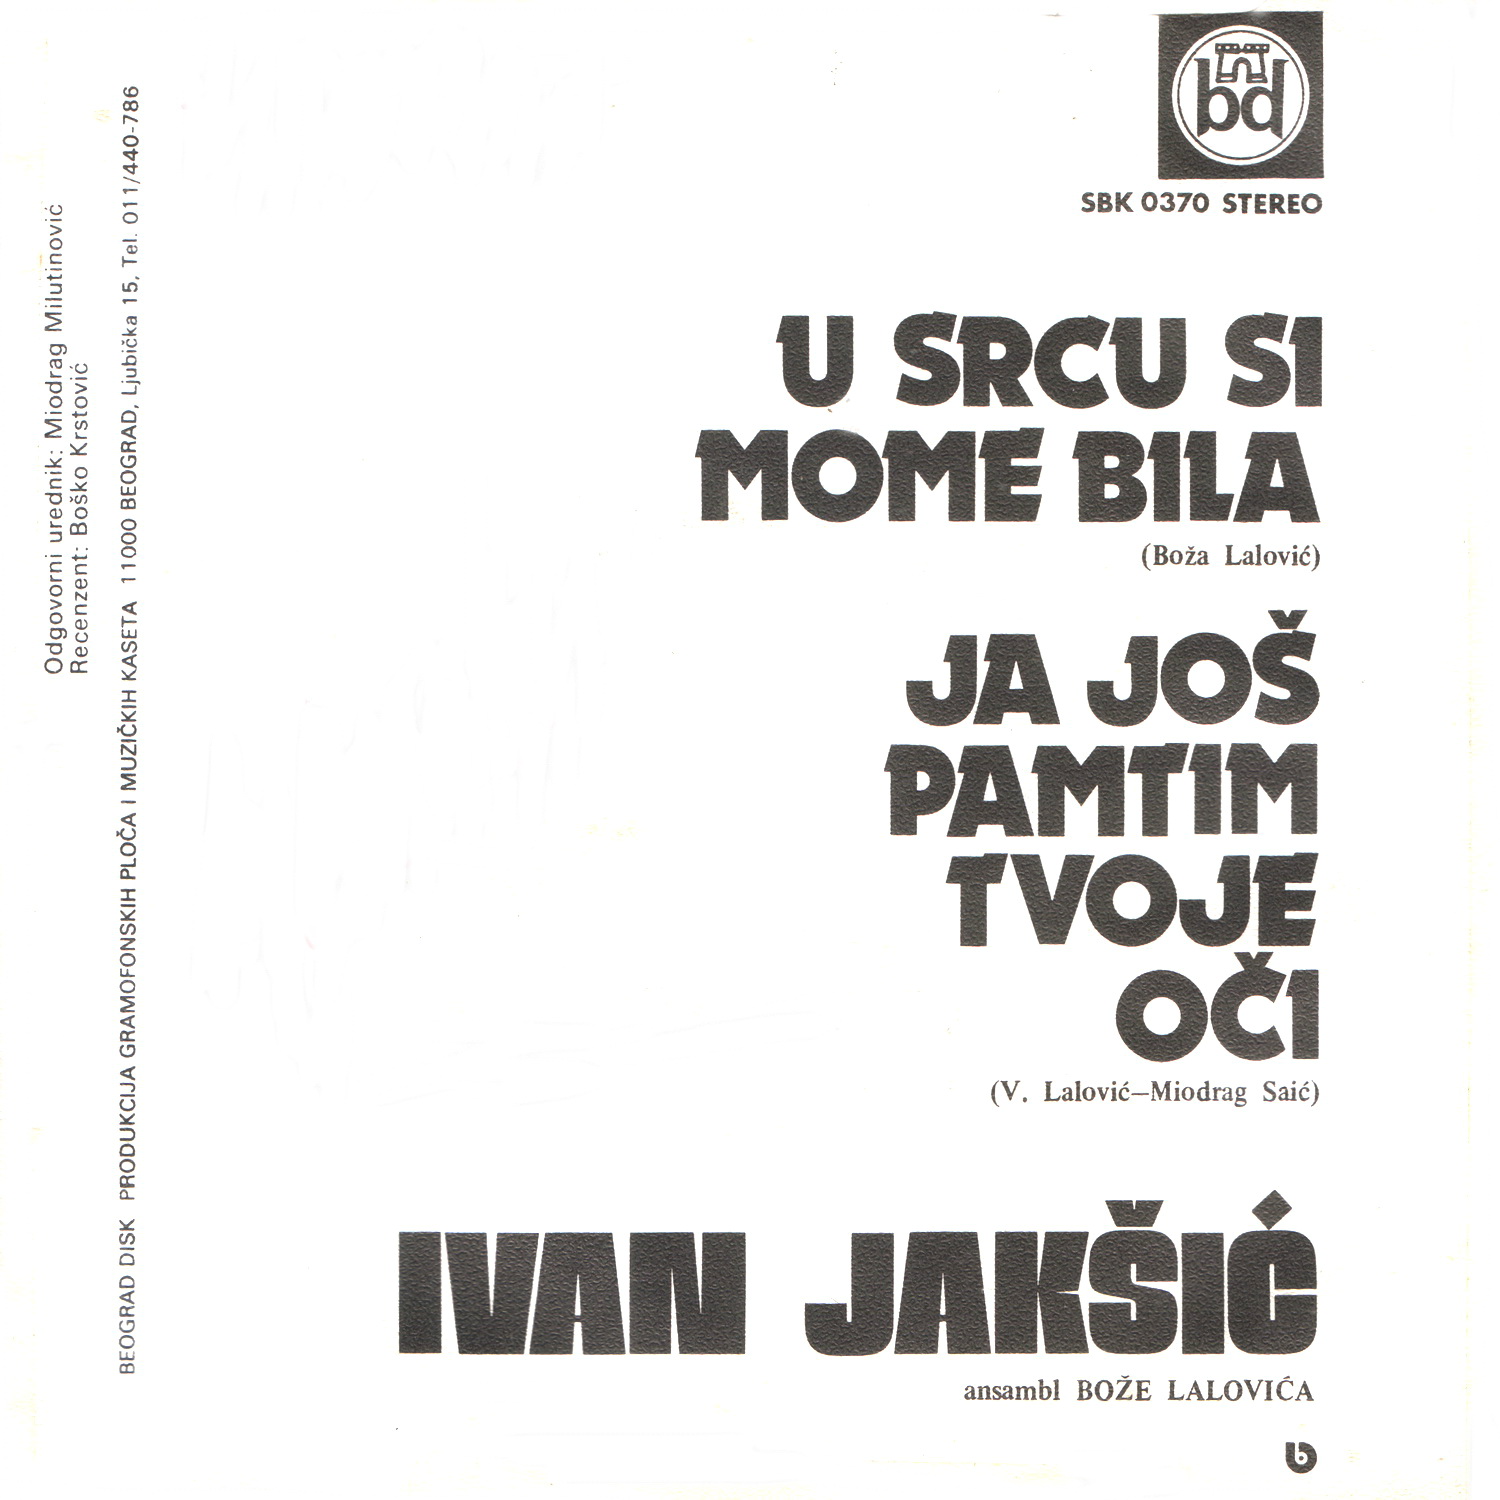 Ivan Jaksic 1977 z